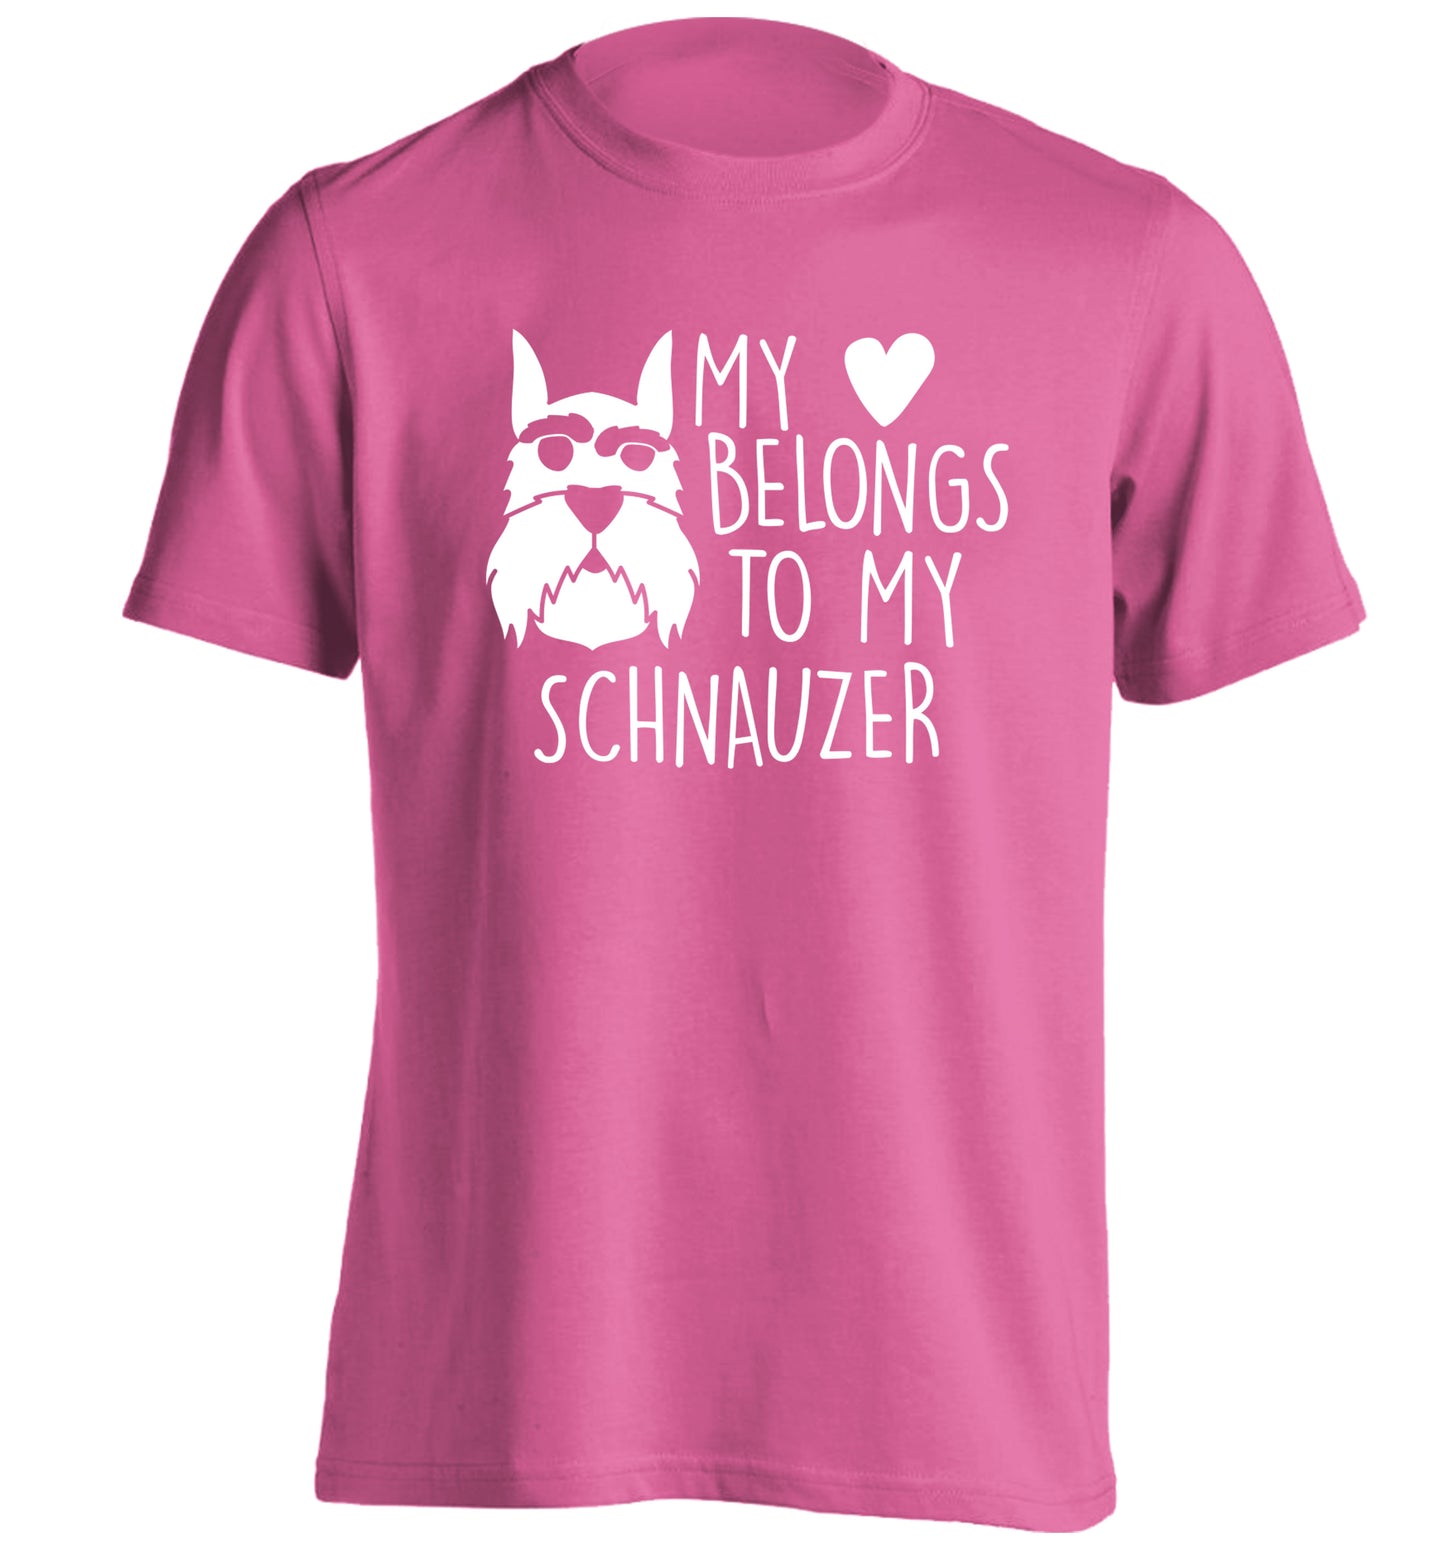 My heart belongs to my schnauzer adults unisex pink Tshirt 2XL